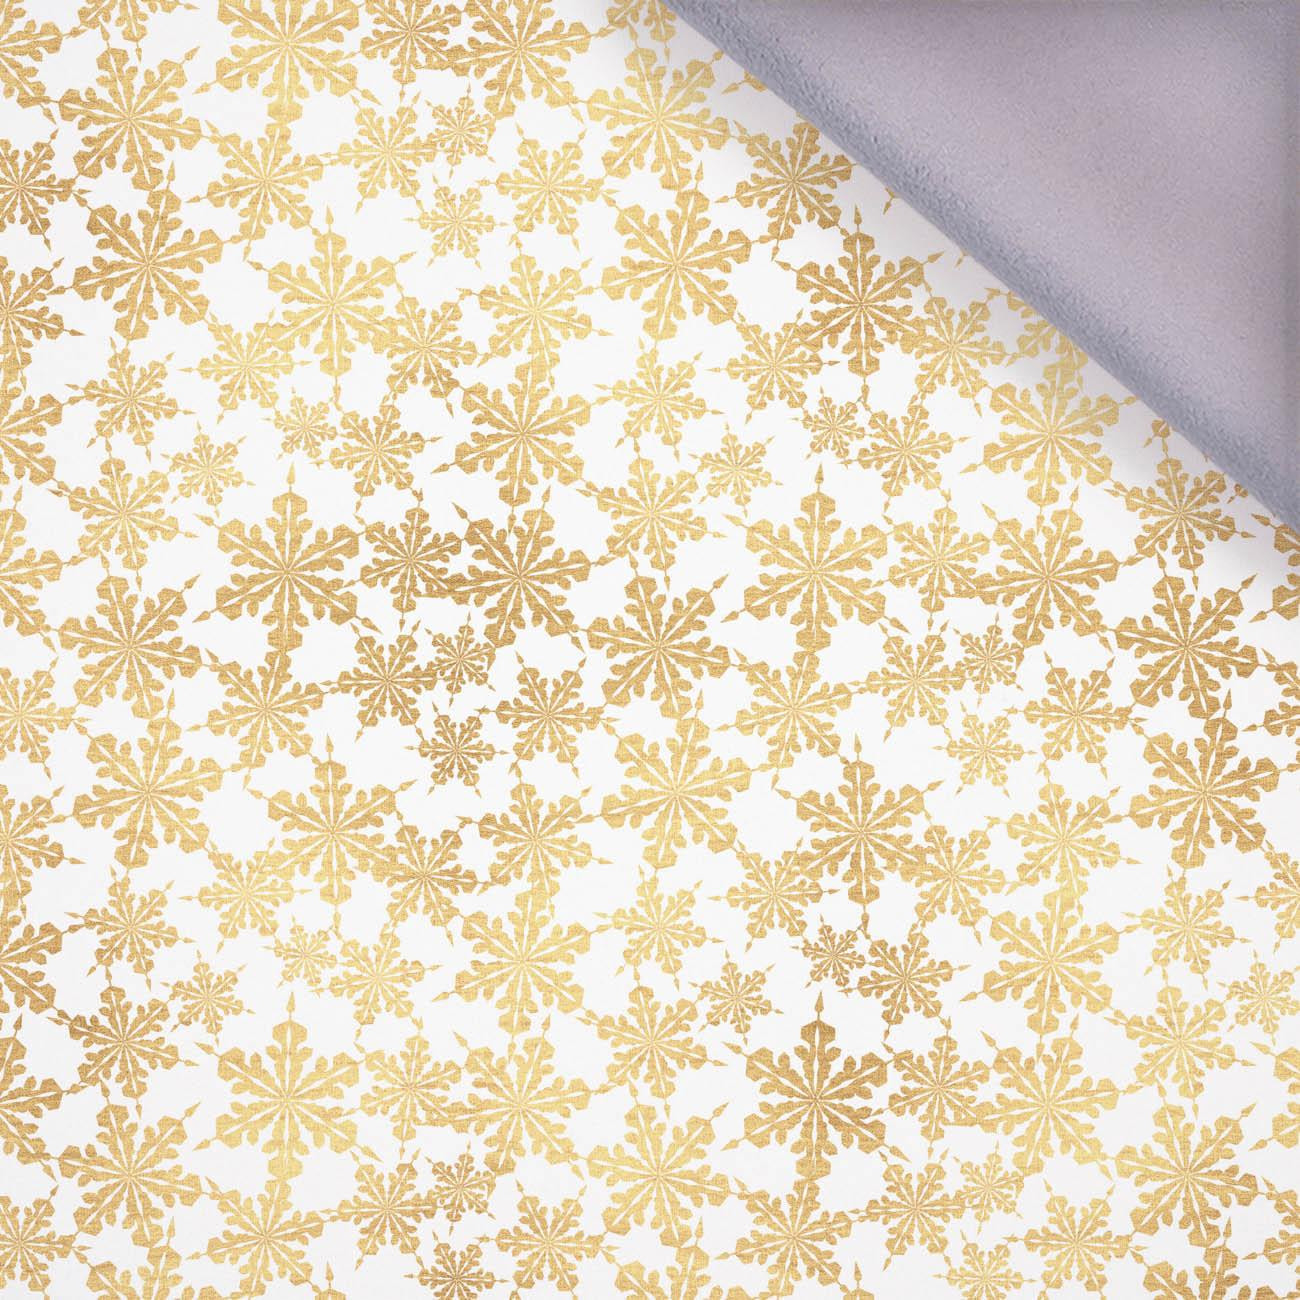 GOLDEN PAPER SNOWFLAKES (WHITE CHRISTMAS) - softshell